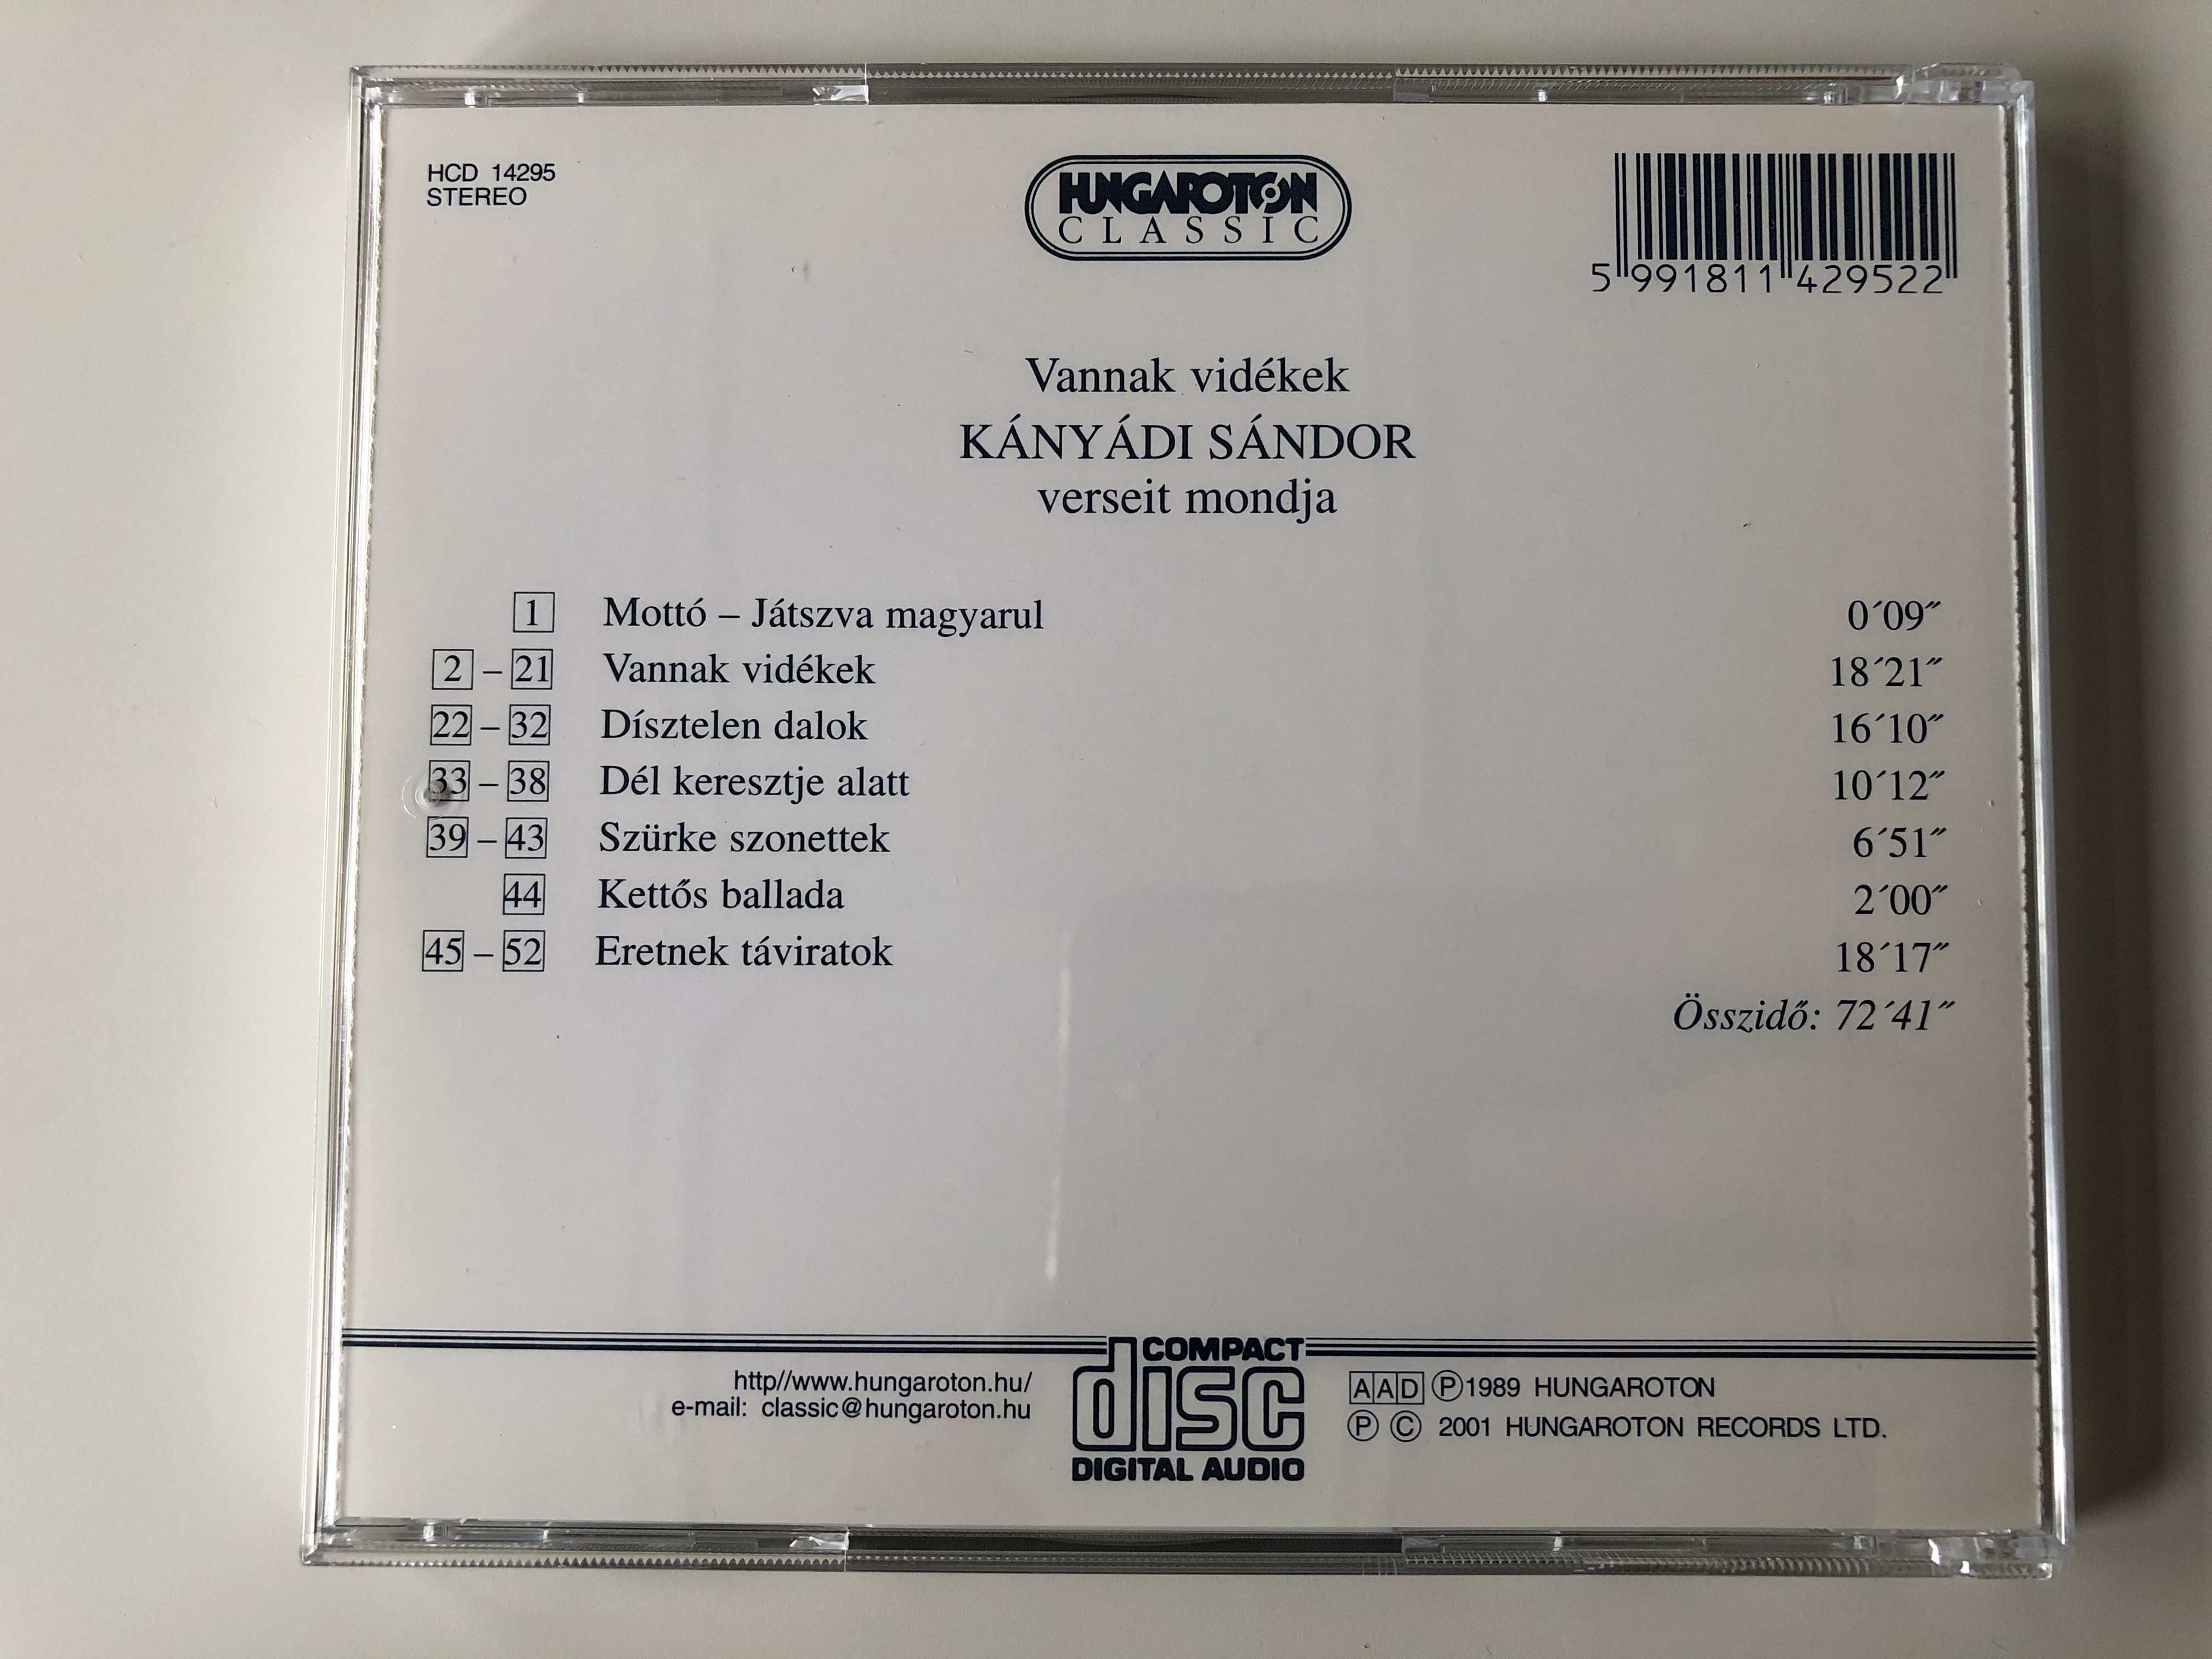 k-ny-di-s-ndor-verseit-mondja-vannak-videkek-hungaroton-classic-audio-cd-2001-stereo-hcd-14295-5-.jpg